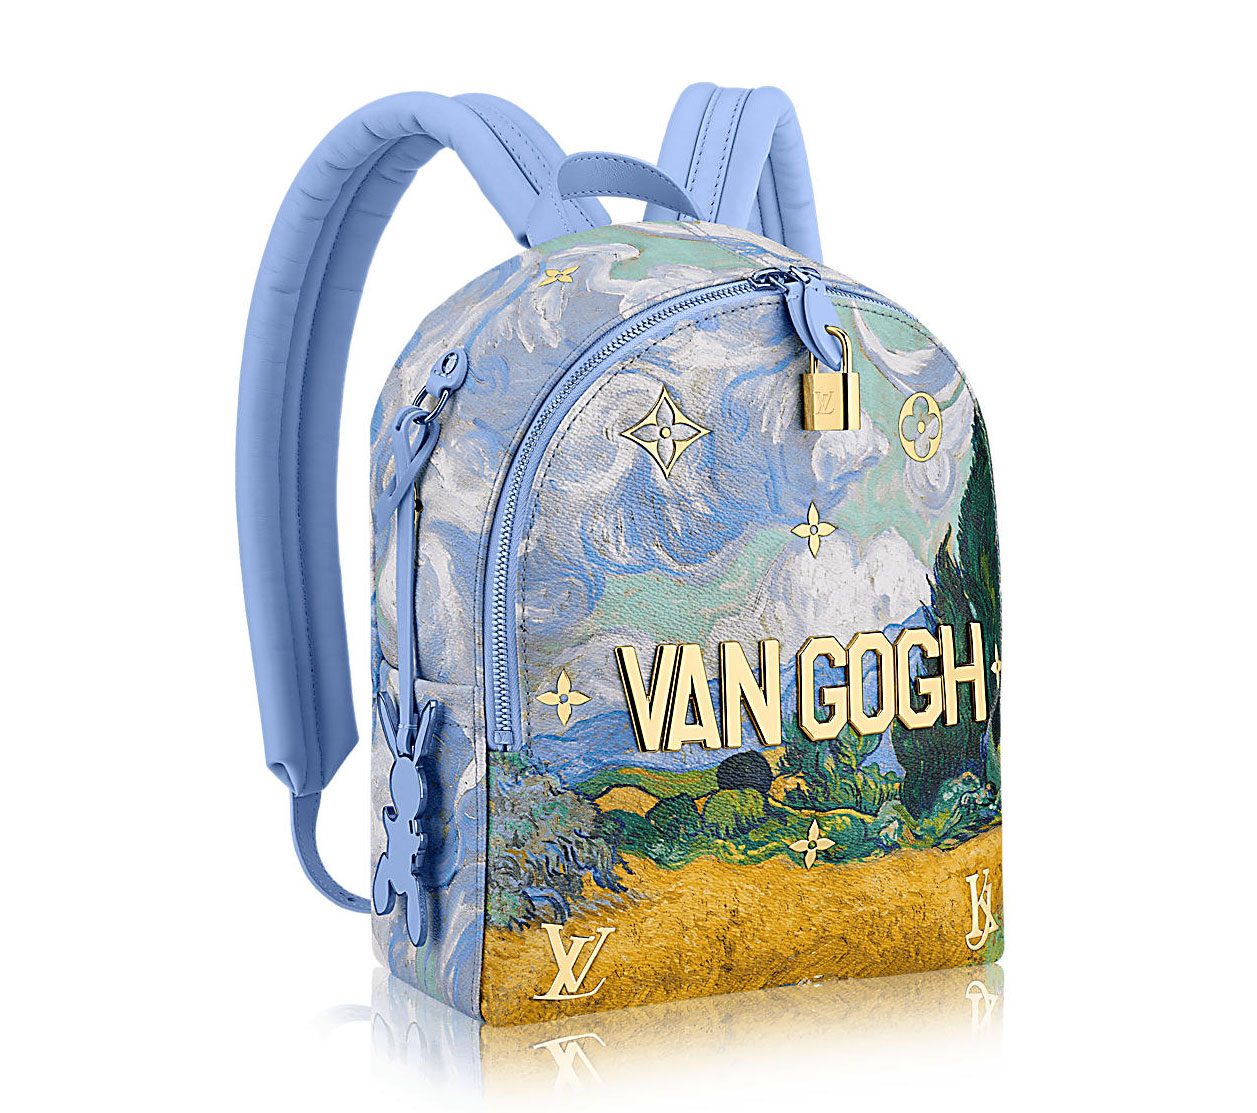 Louis Vuitton Jeff Koons Vincent Van Gogh Neverfull Handbag